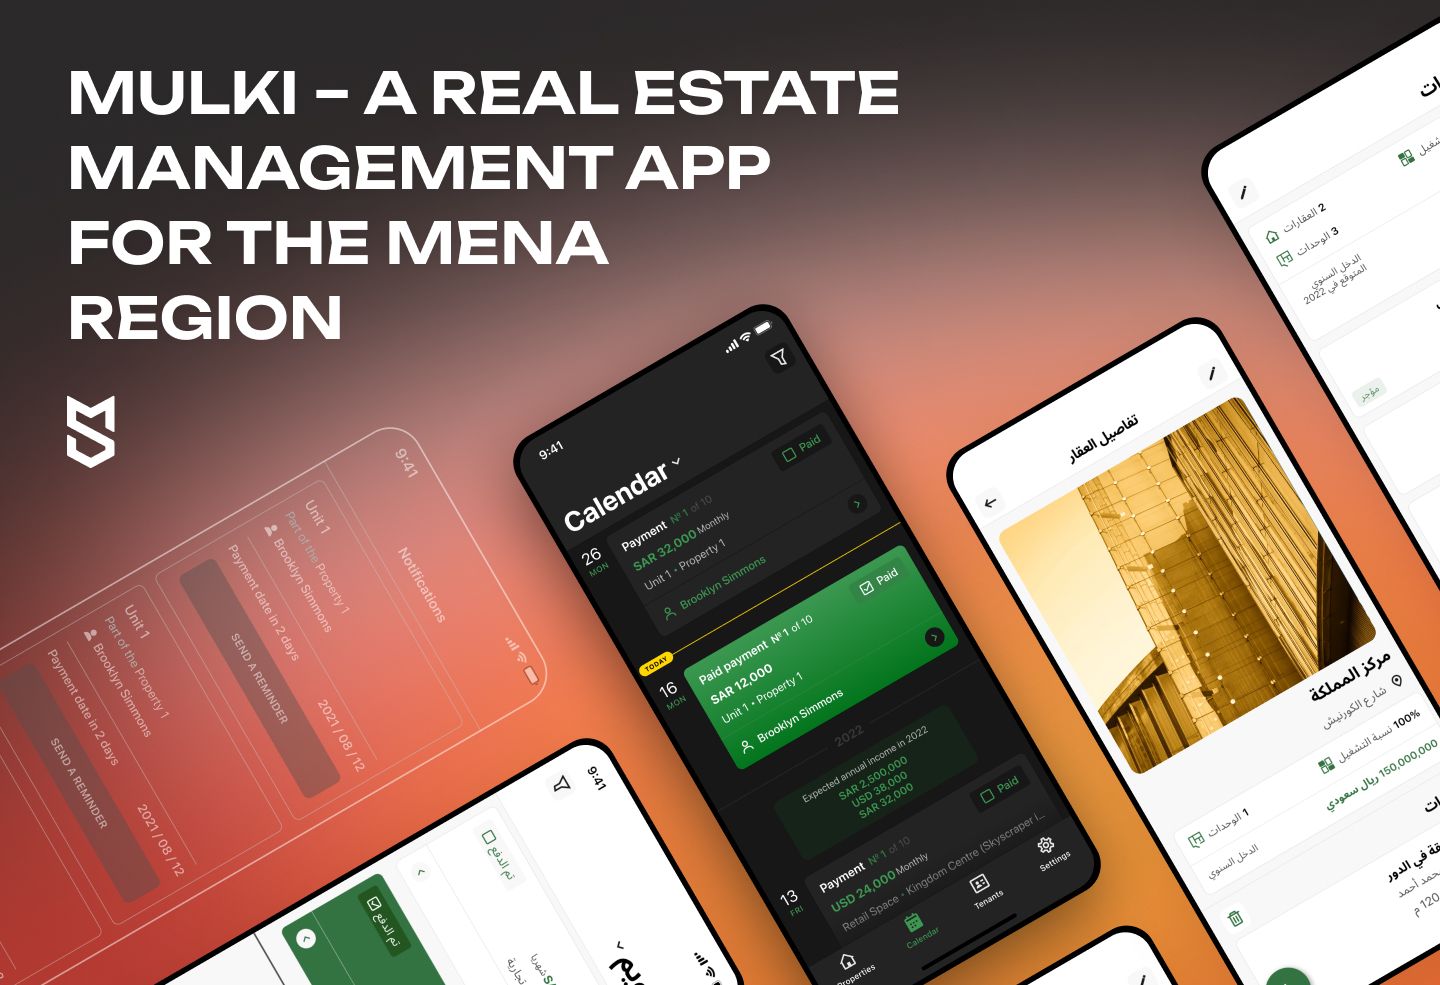 Mulki - a real estate management app for the MENA region